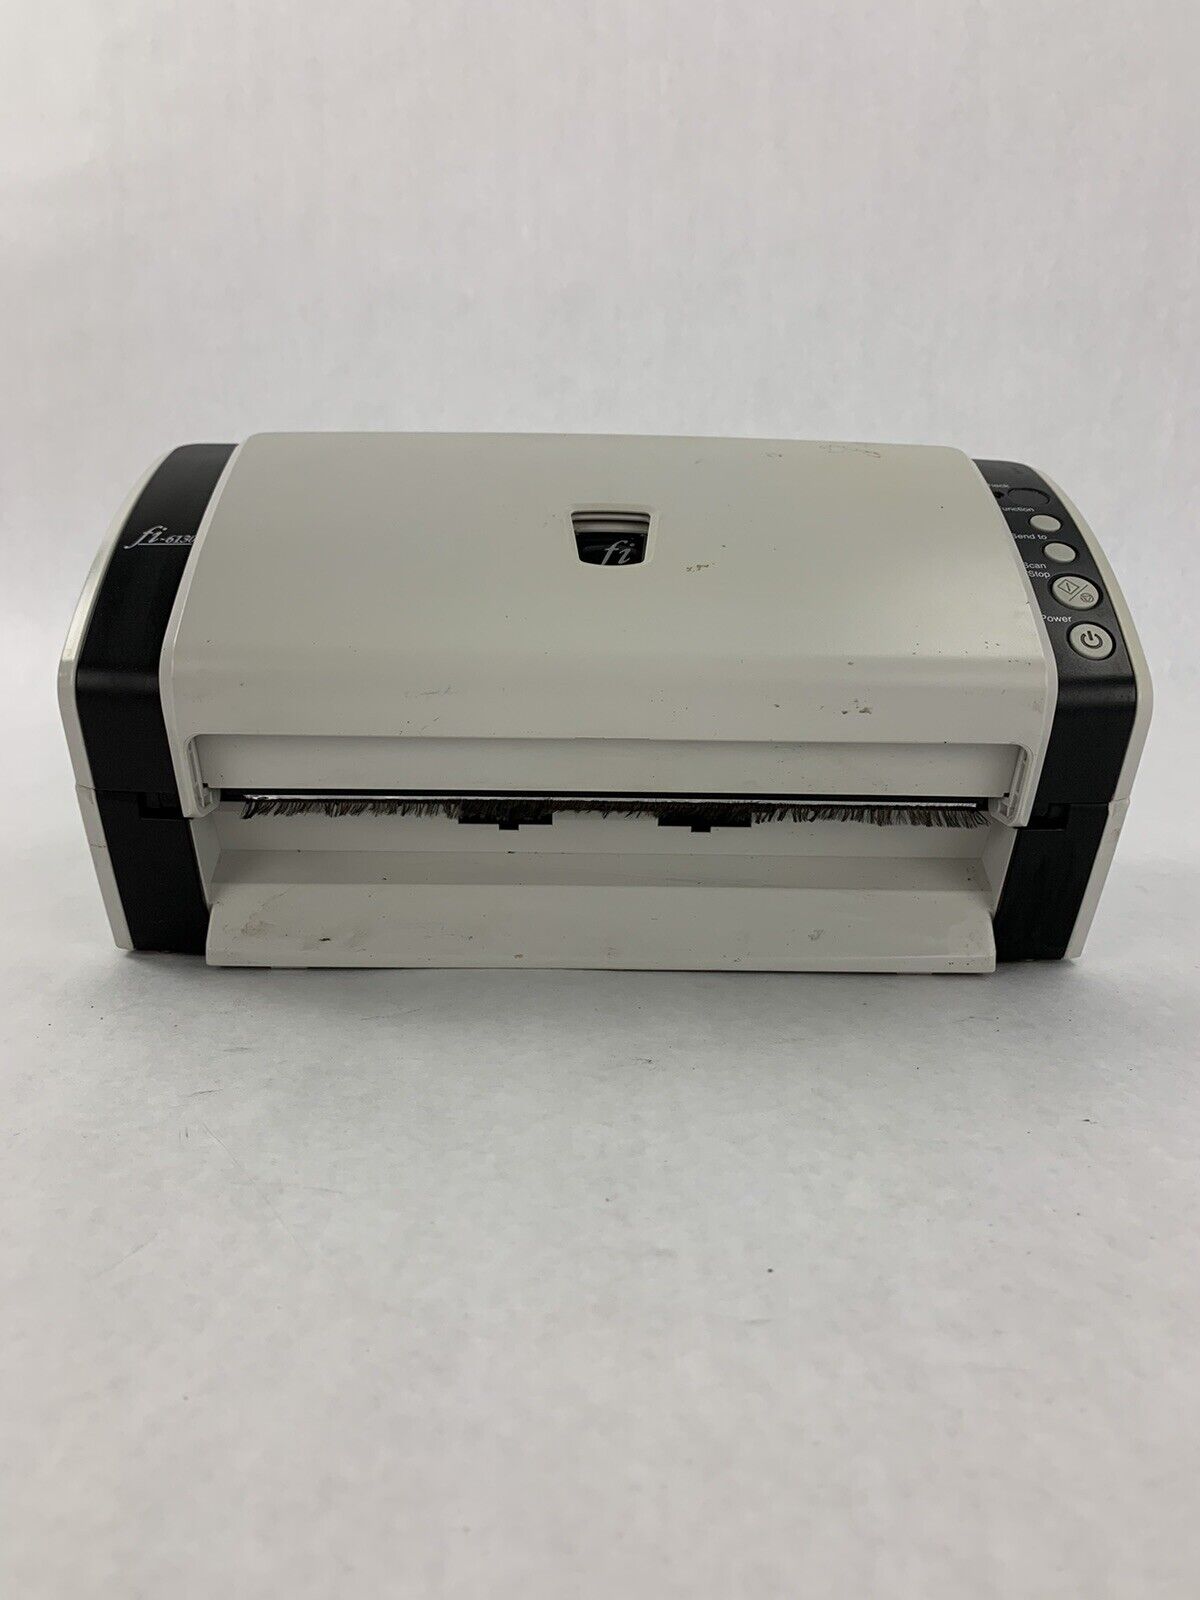 Fujitsu fi-6130 Desktop Printer and Scanner with Bad Rollers